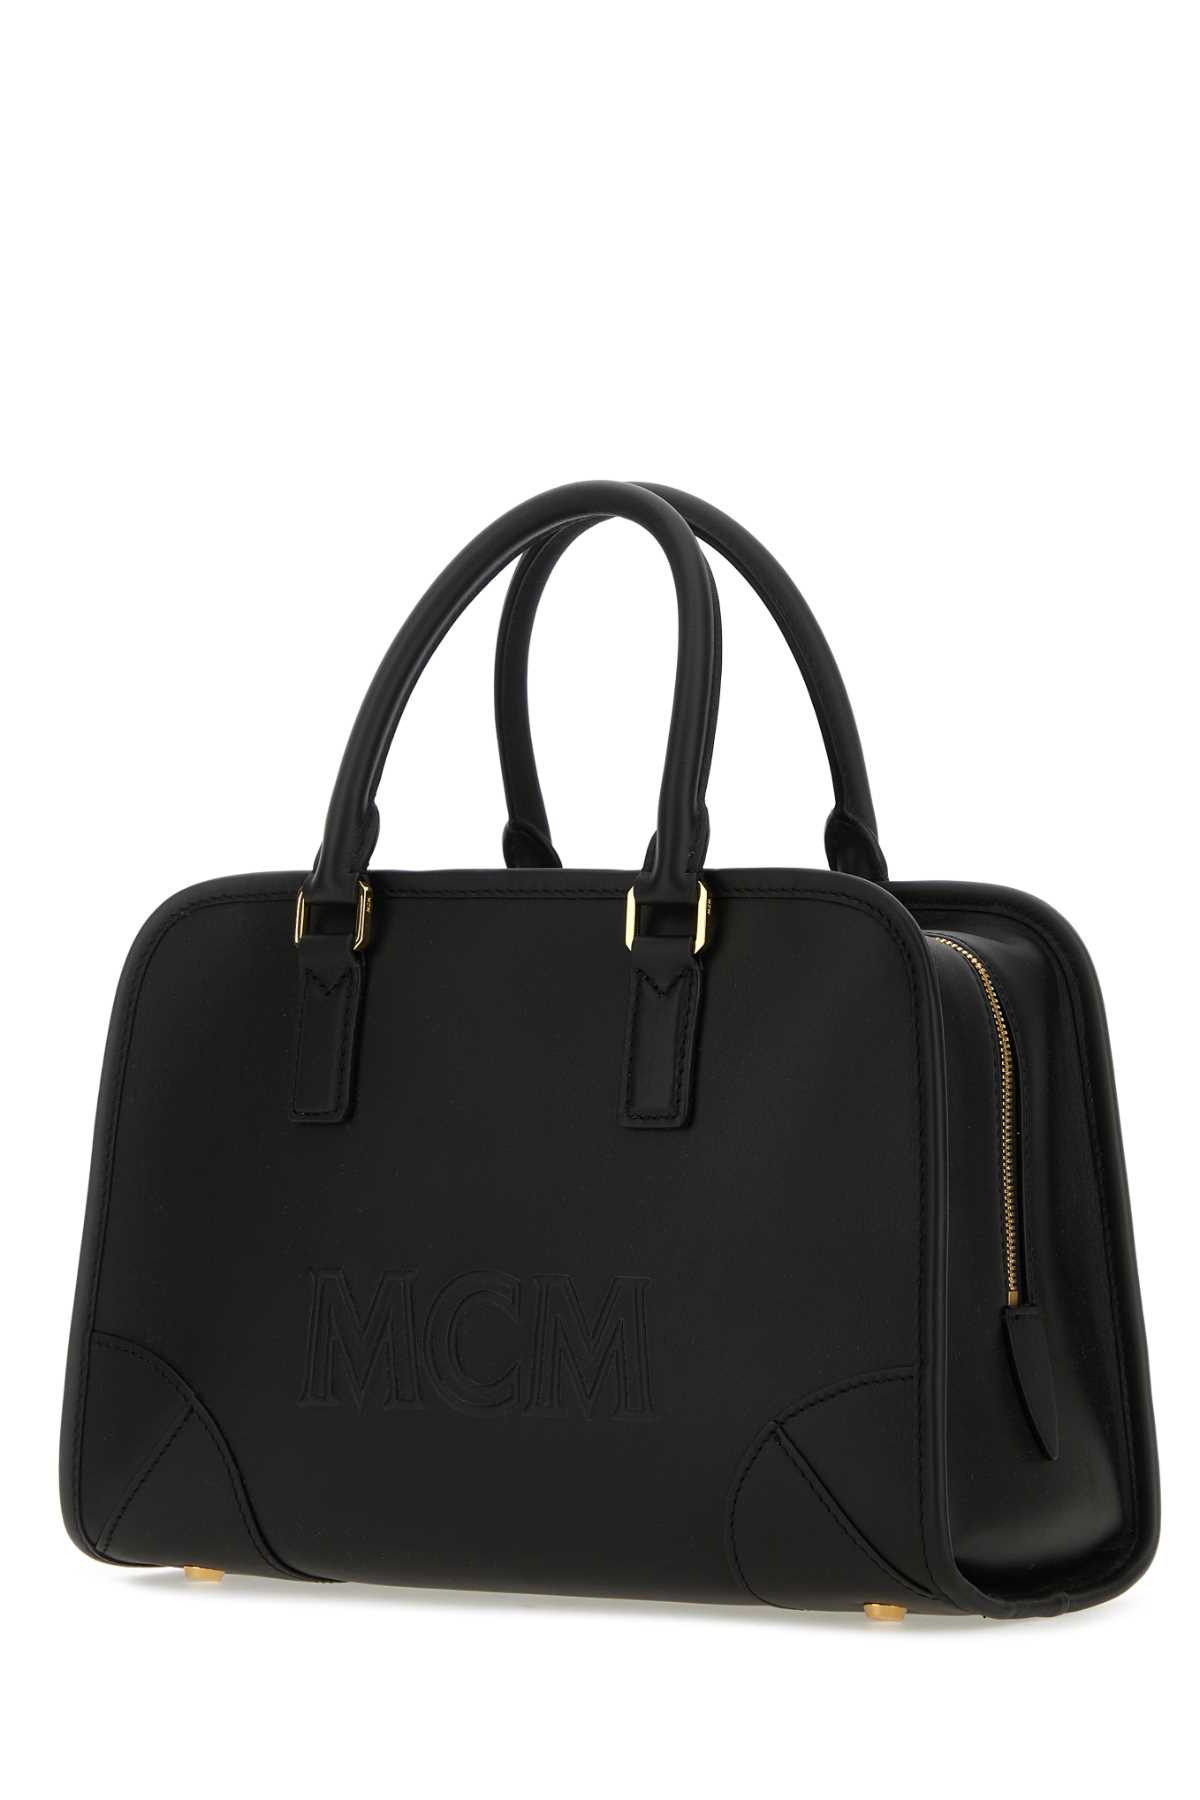 Mcm Black Leather Aren Boston Medium Handbag